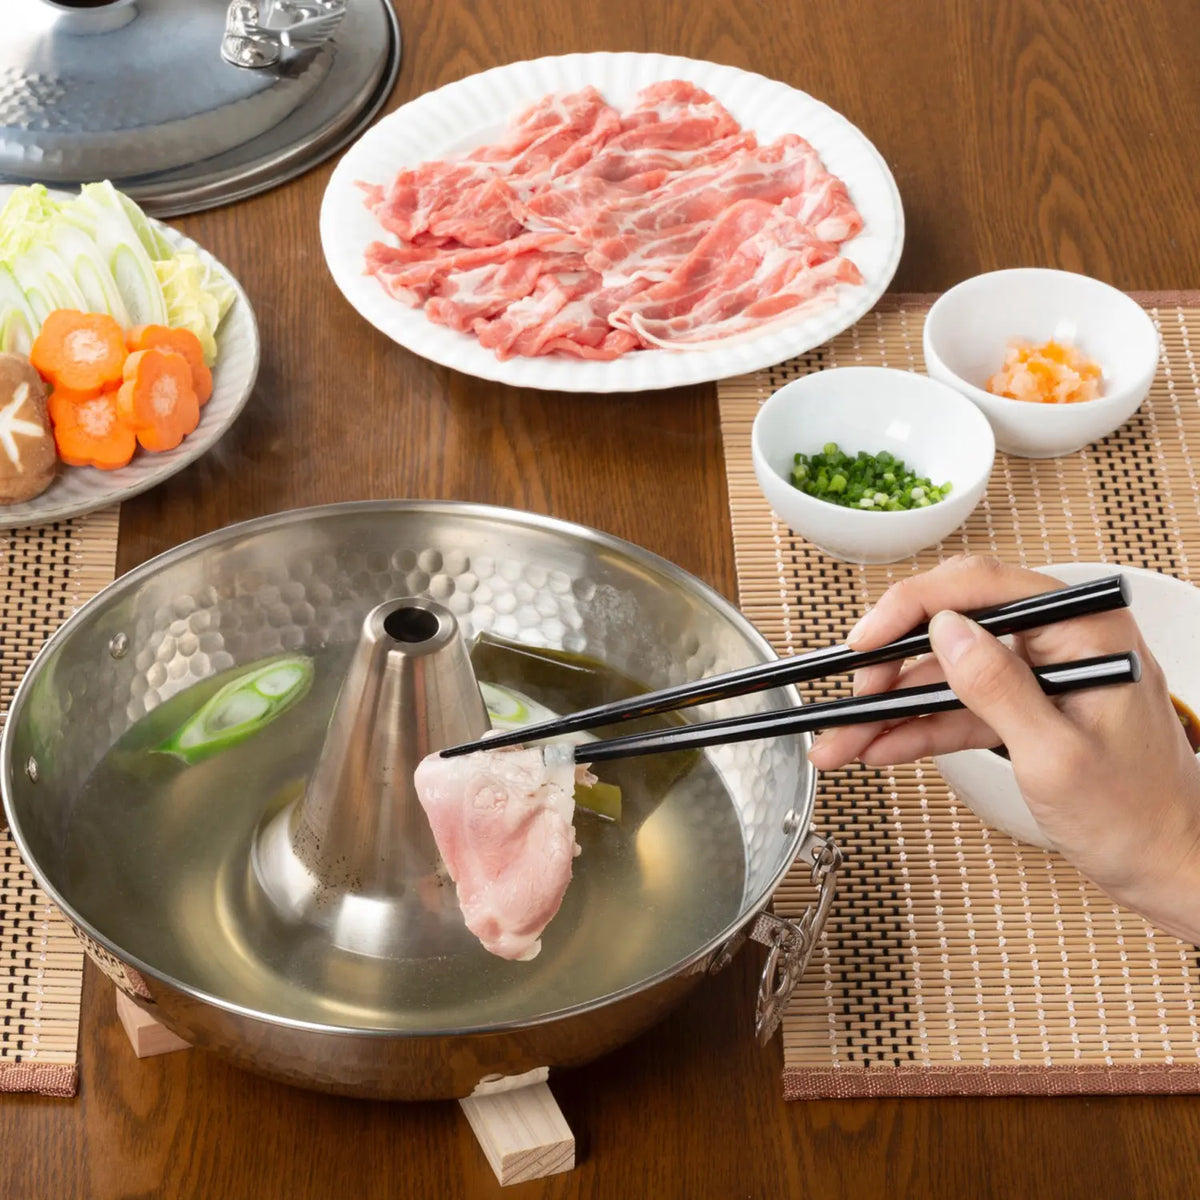 How to Use Shabu Shabu Hot Pots - Globalkitchen Japan